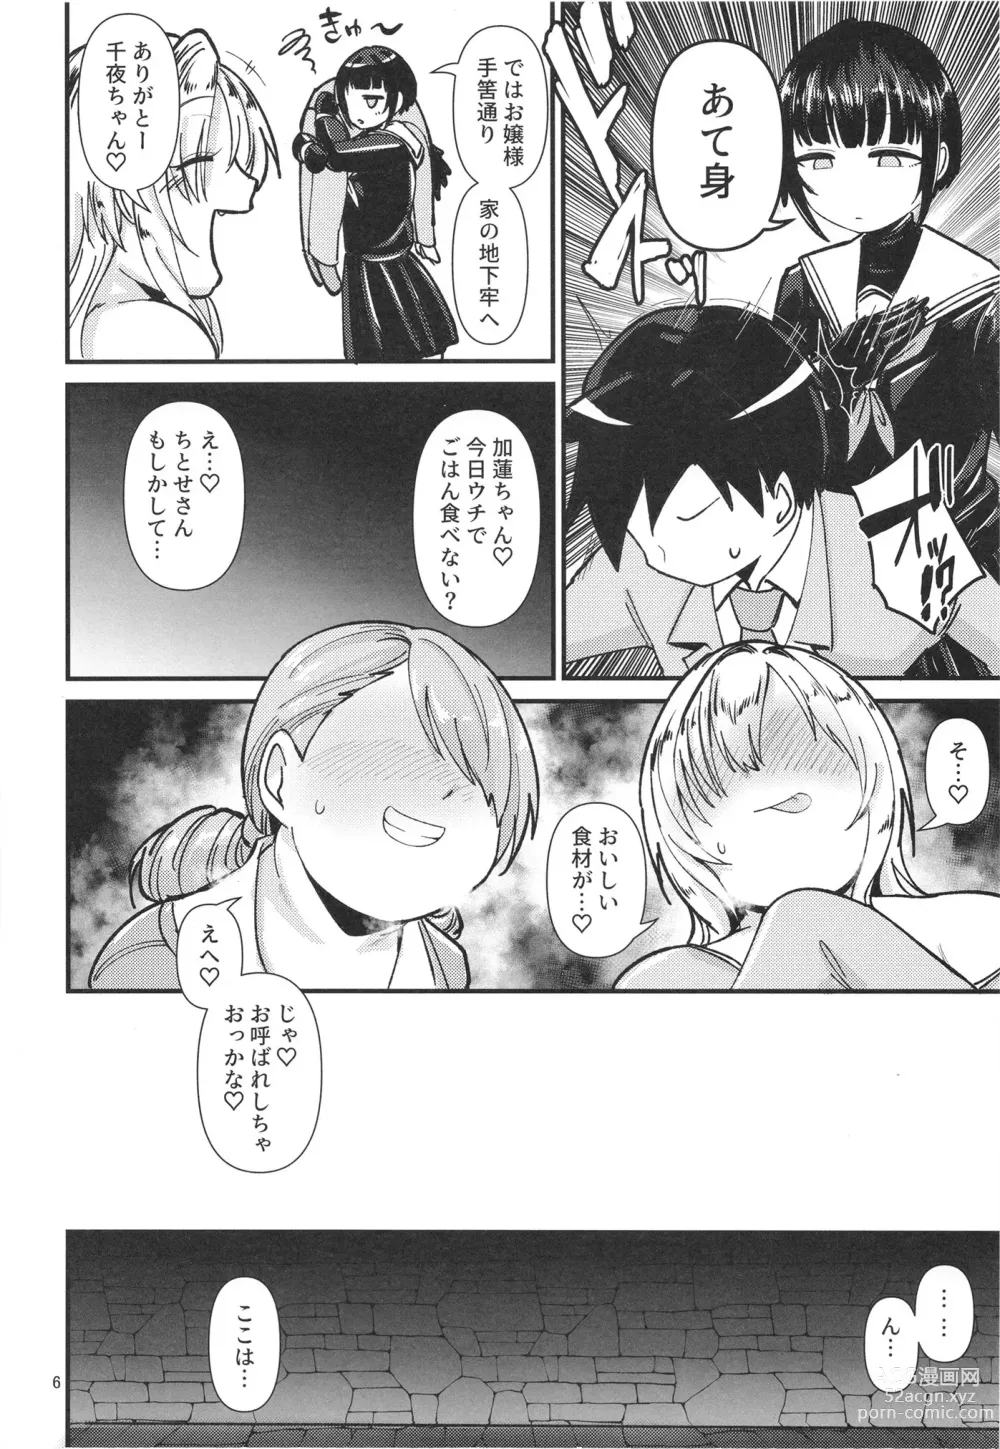 Page 6 of doujinshi Muchimuchi to kare